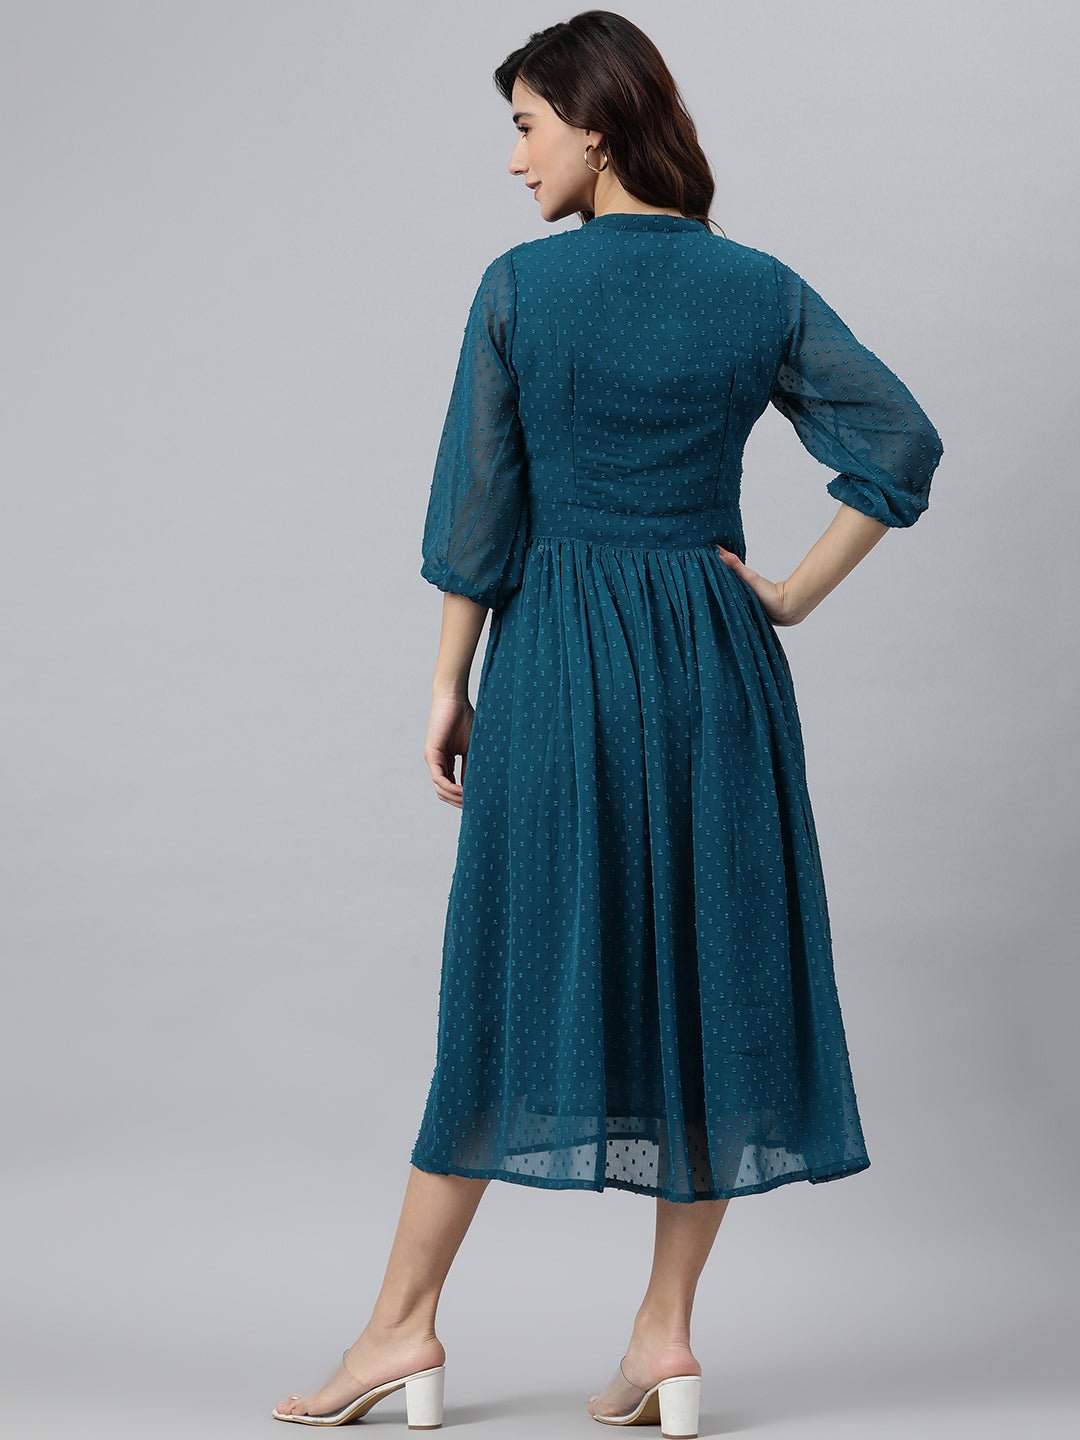 Women's Self Design Teal Poly Chiffon Dress - Janasya